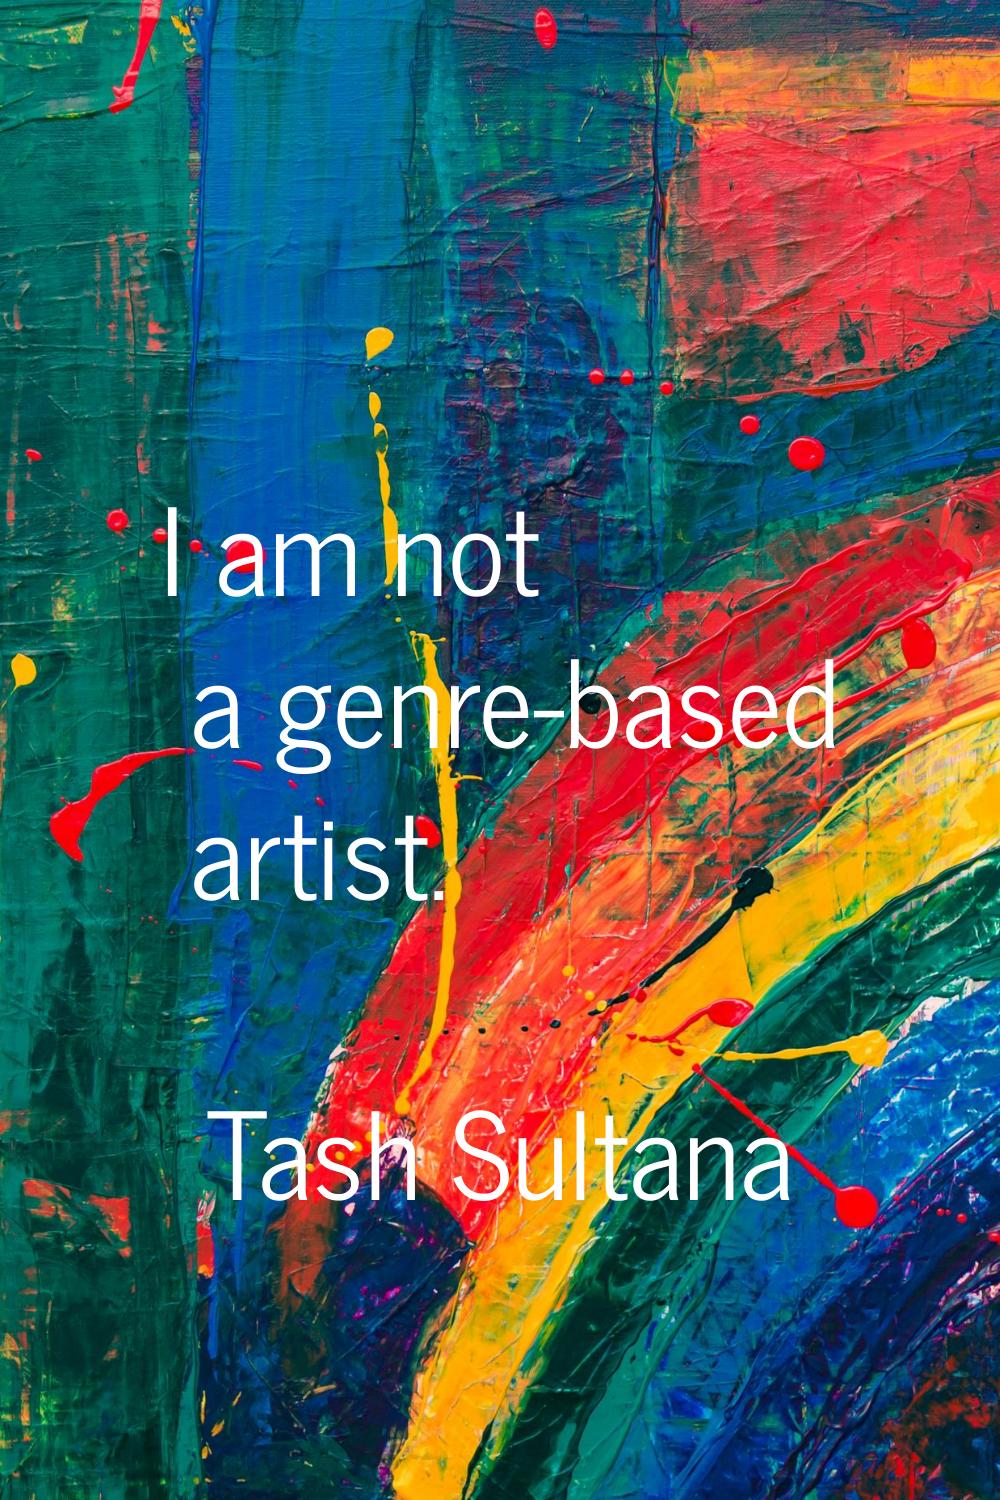 I am not a genre-based artist.